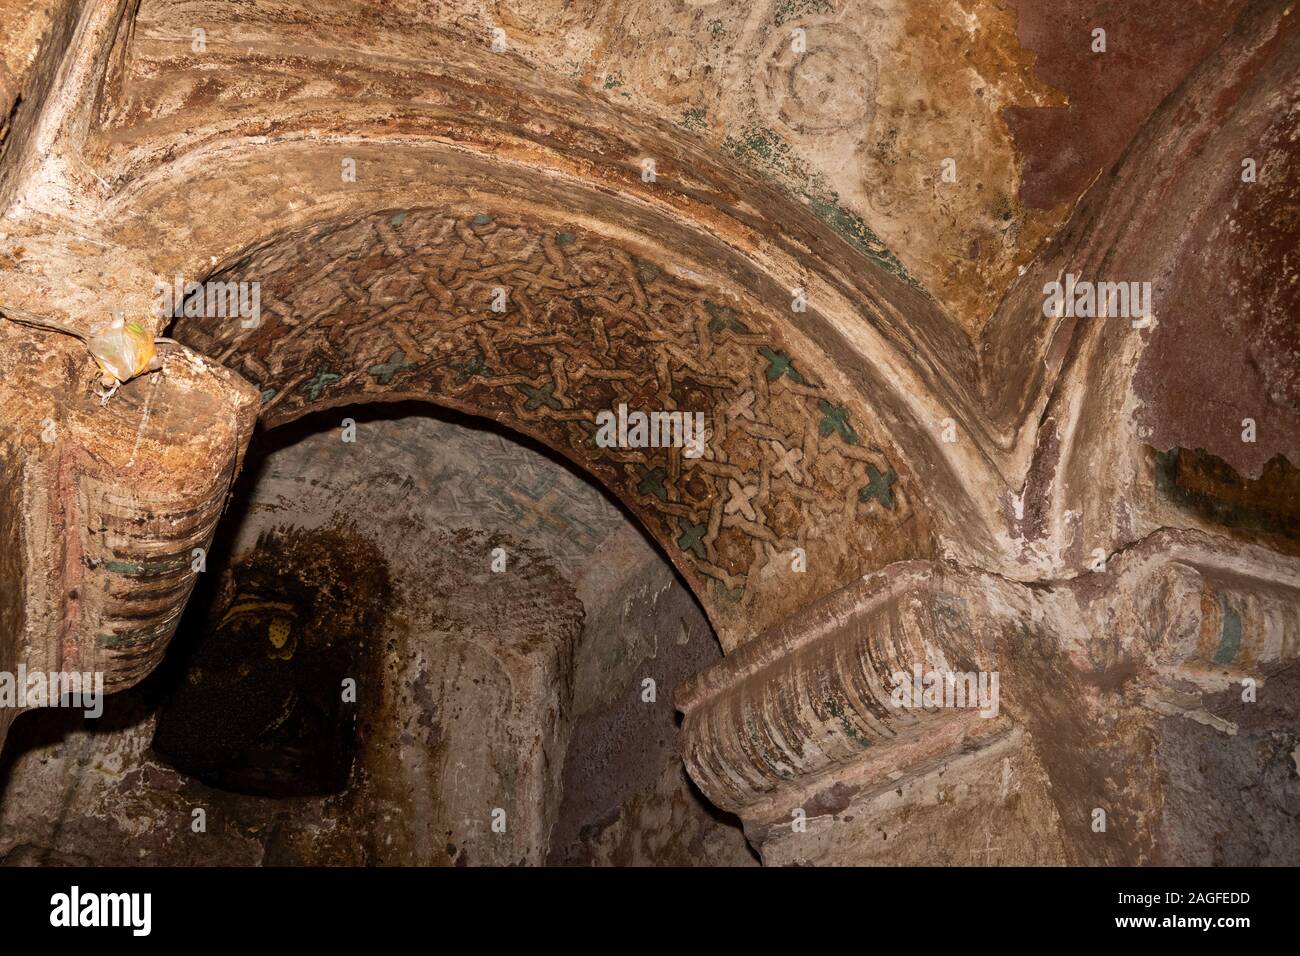 Ethiopia, Amhara Region, Lalibela, Arbatu Ensessa, Biblia Chirkos, ancient rock hewn church, ancient wall painting patterned design above arch Stock Photo